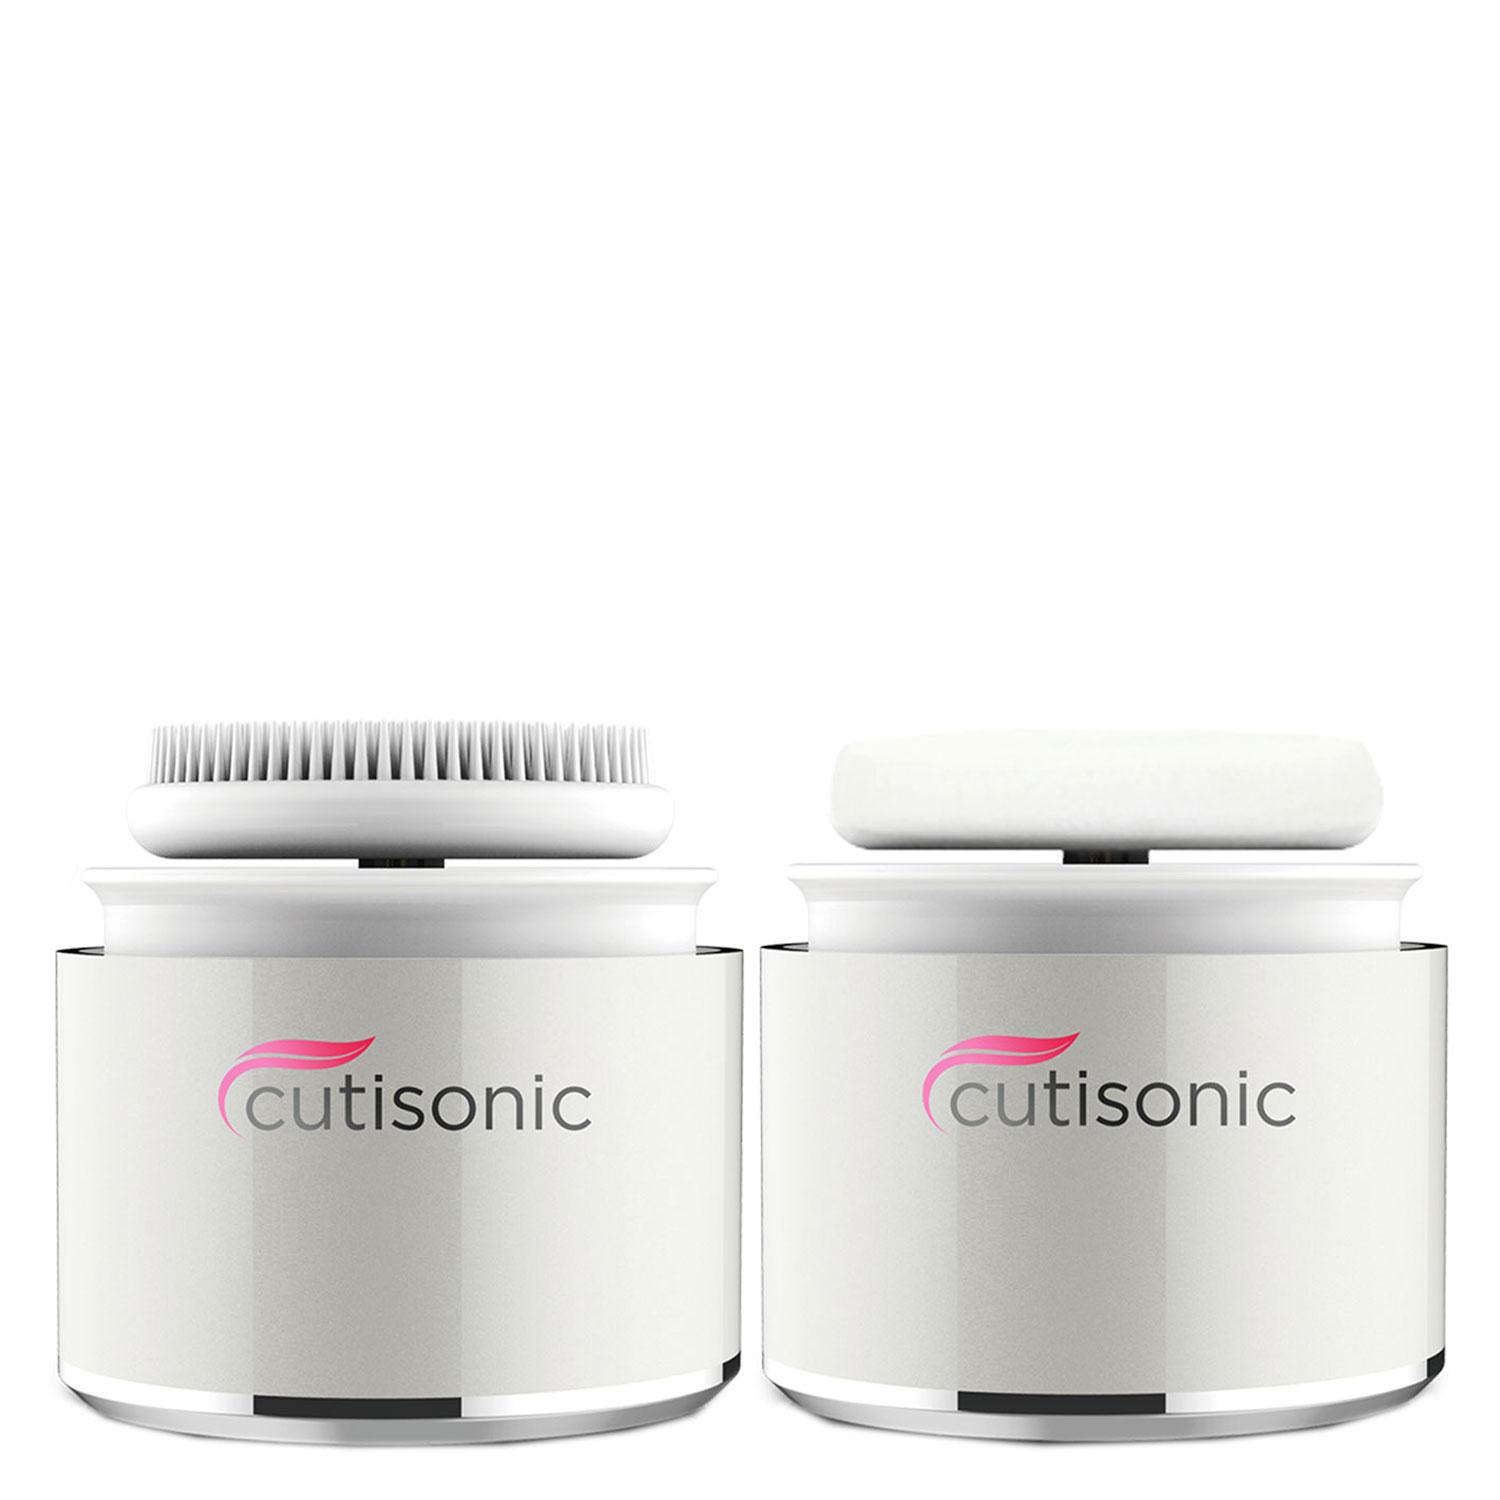 Cutisonic - Ultrasonic face care device